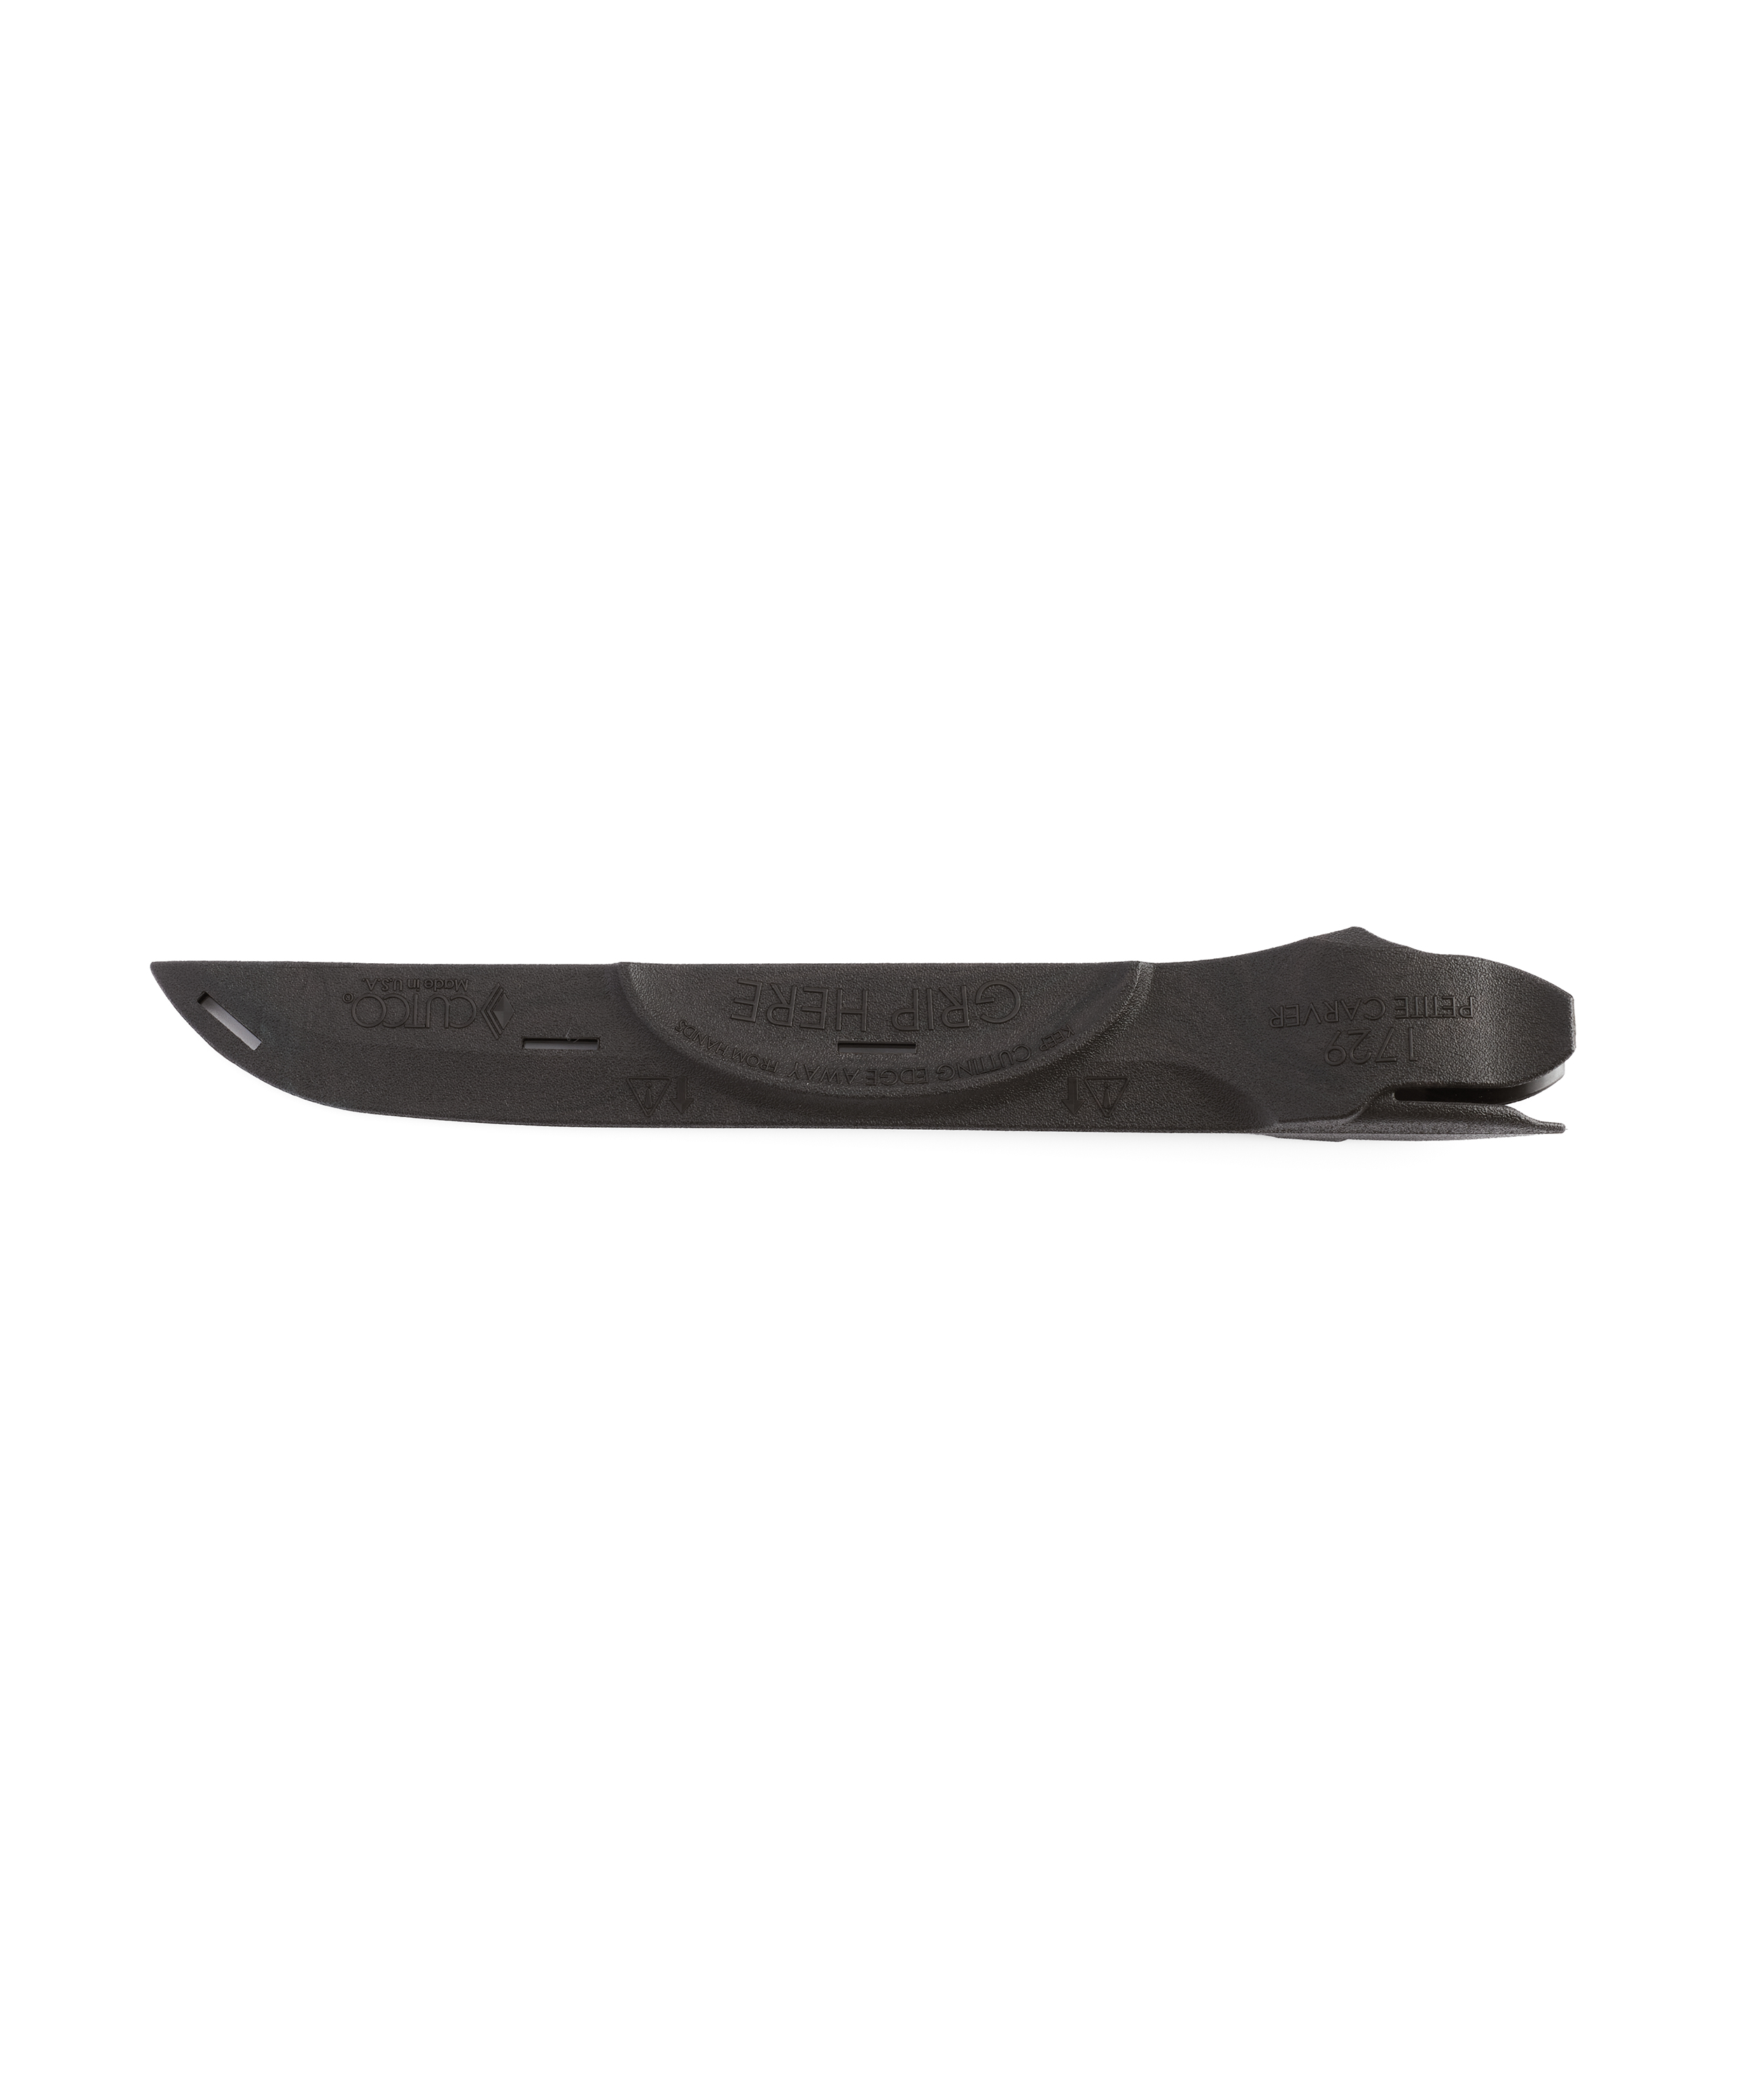 CUTCO Serrated Petite Carver Carving Knife 1729 JD 7” Blade USA EUC